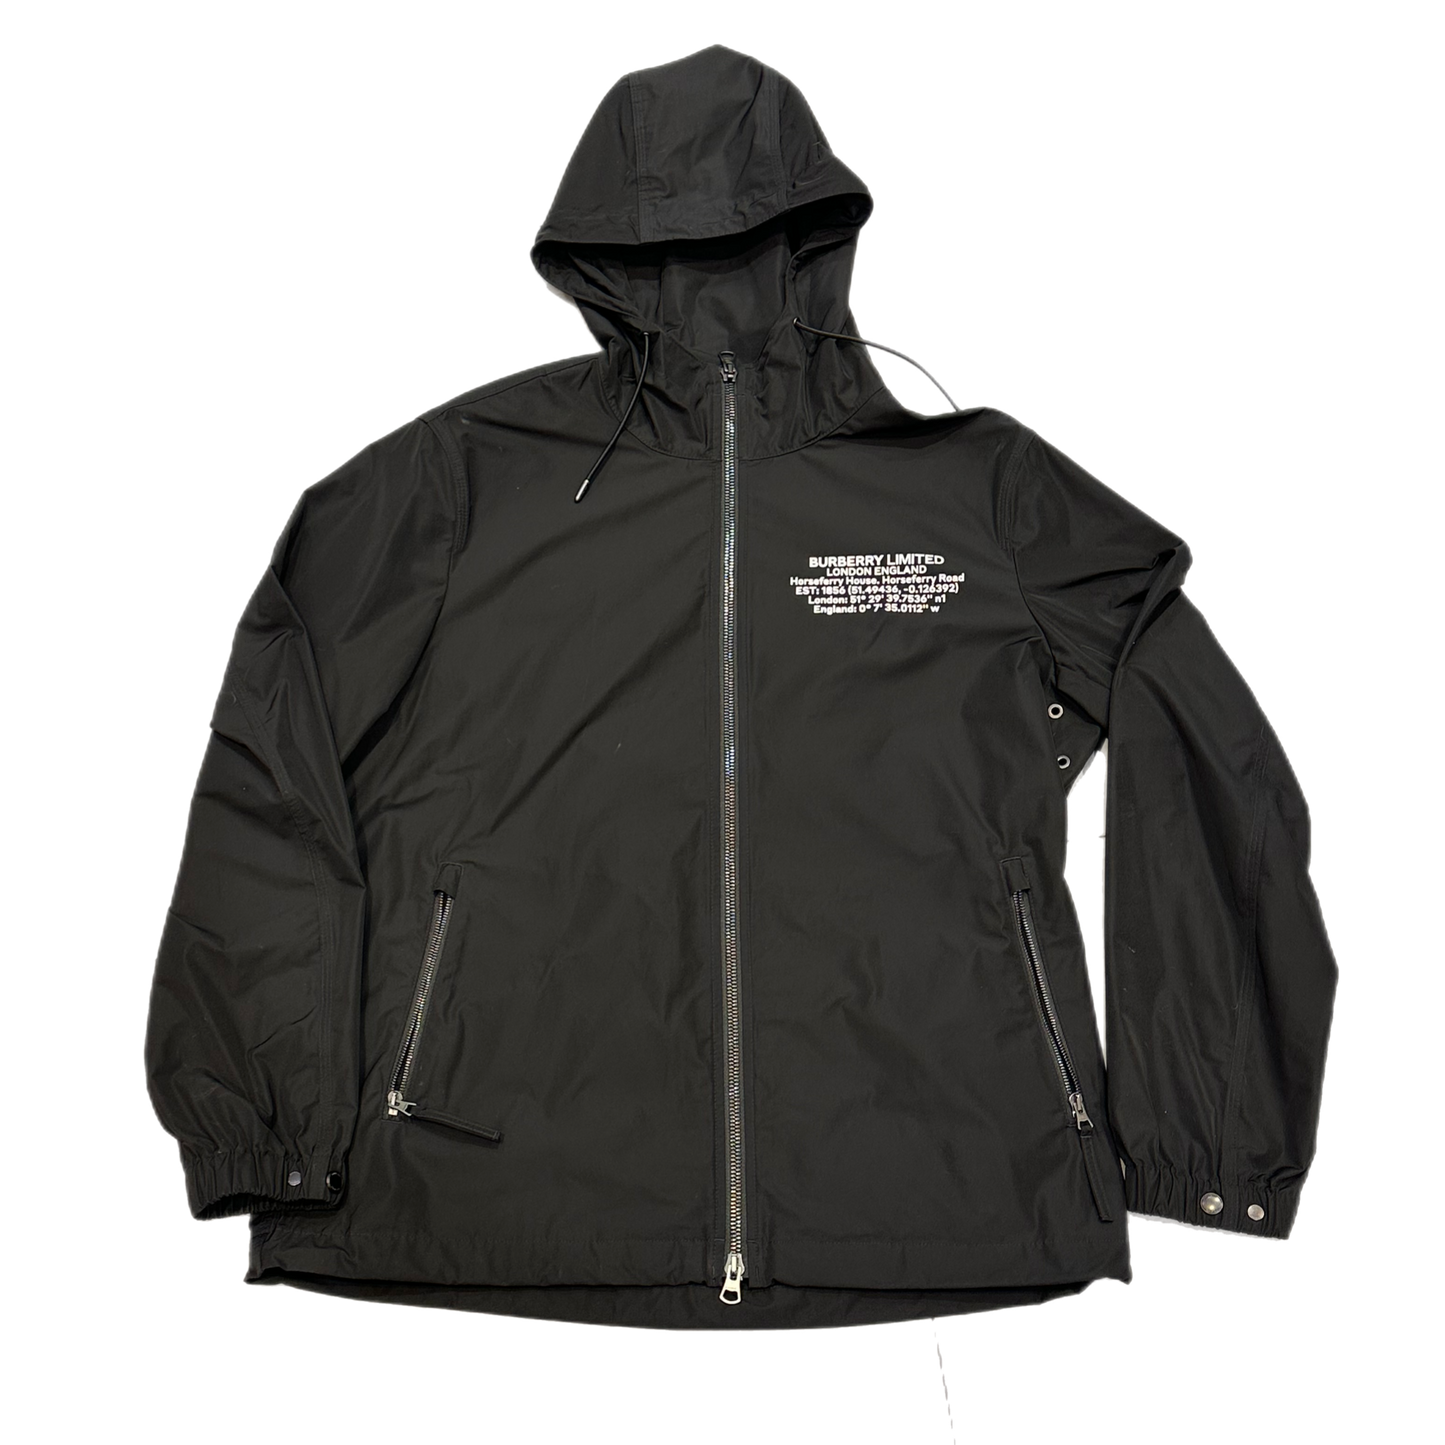 Burberry - " Black Zip Up Jacket" -Size Large